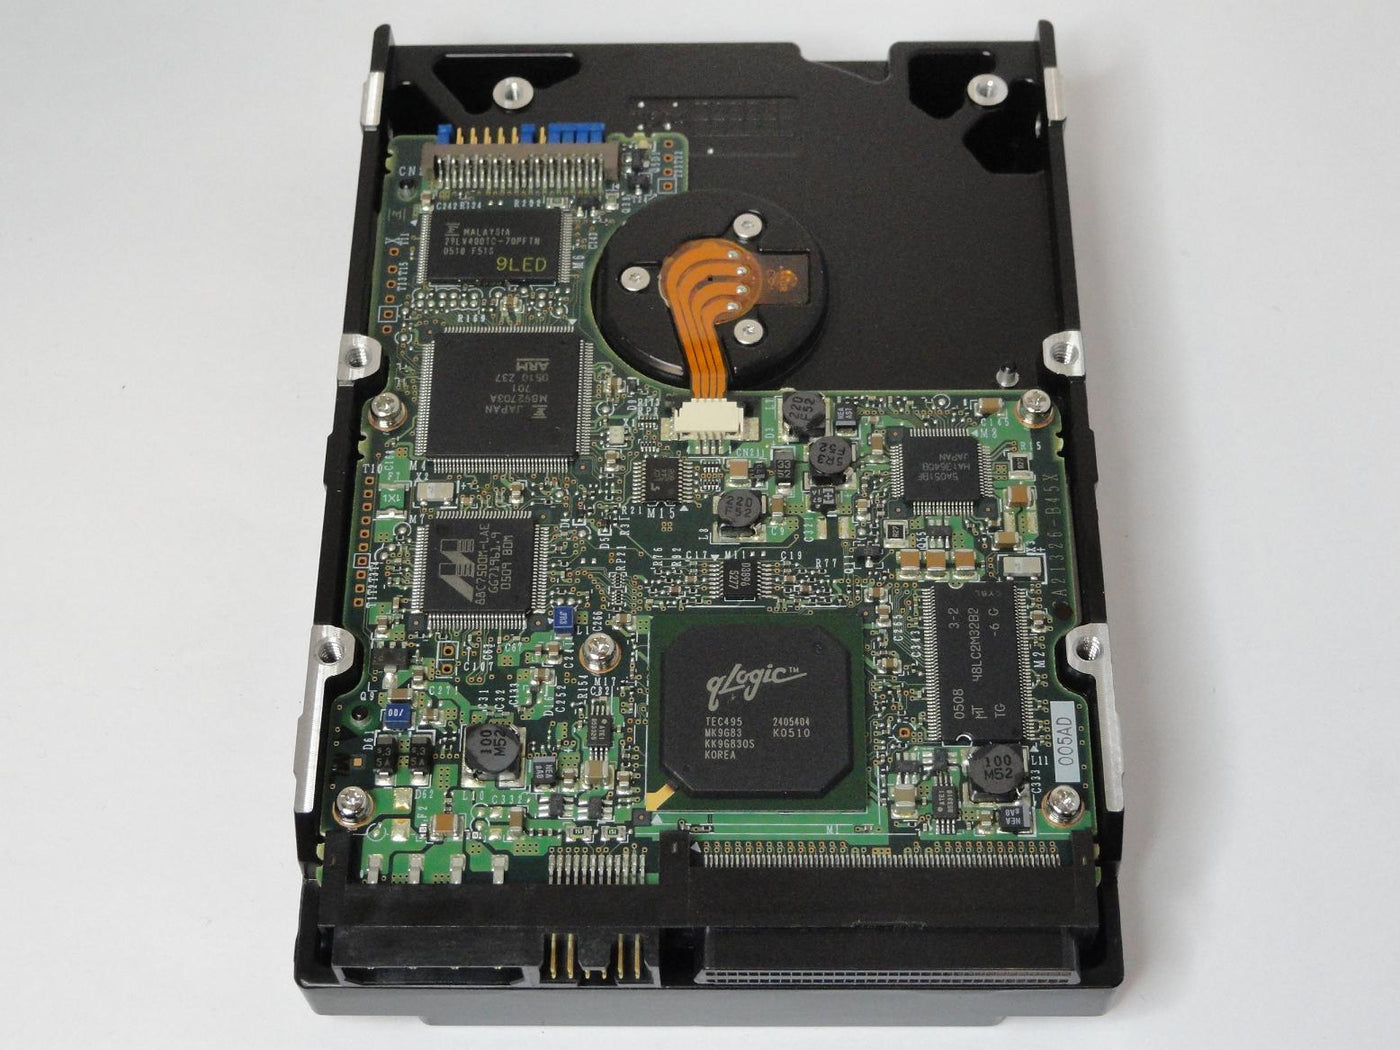 MC4219_CA06350-B17900WL_Fujitsu 73GB SCSI 68 Pin 15Krpm 3.5in Recert HDD - Image2